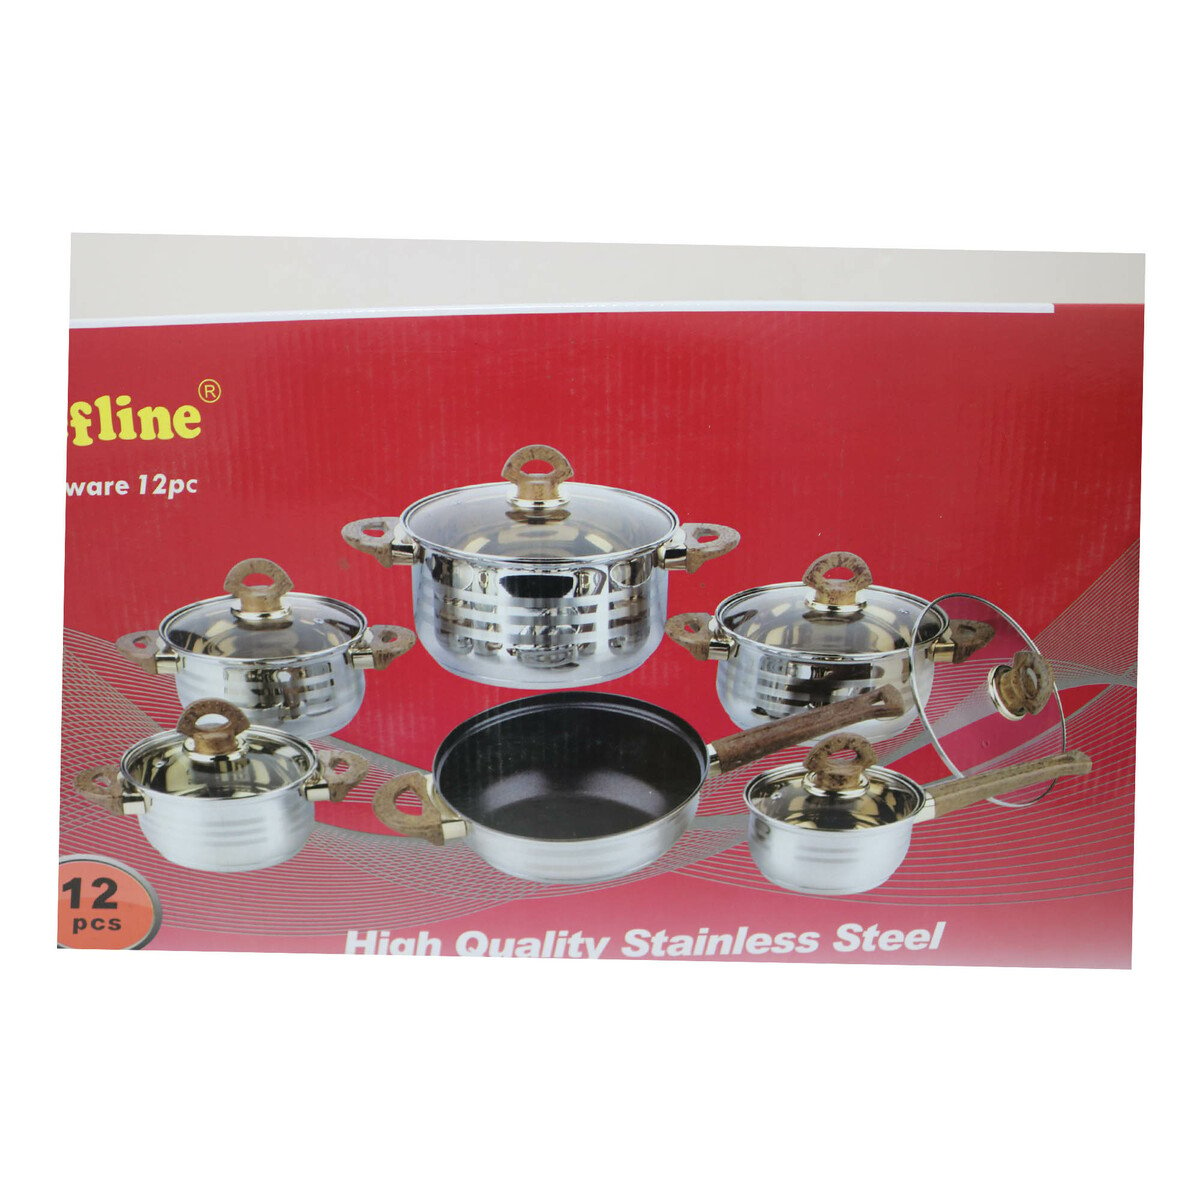 Chefline Stainless Steel Cookware Set 12Pcs